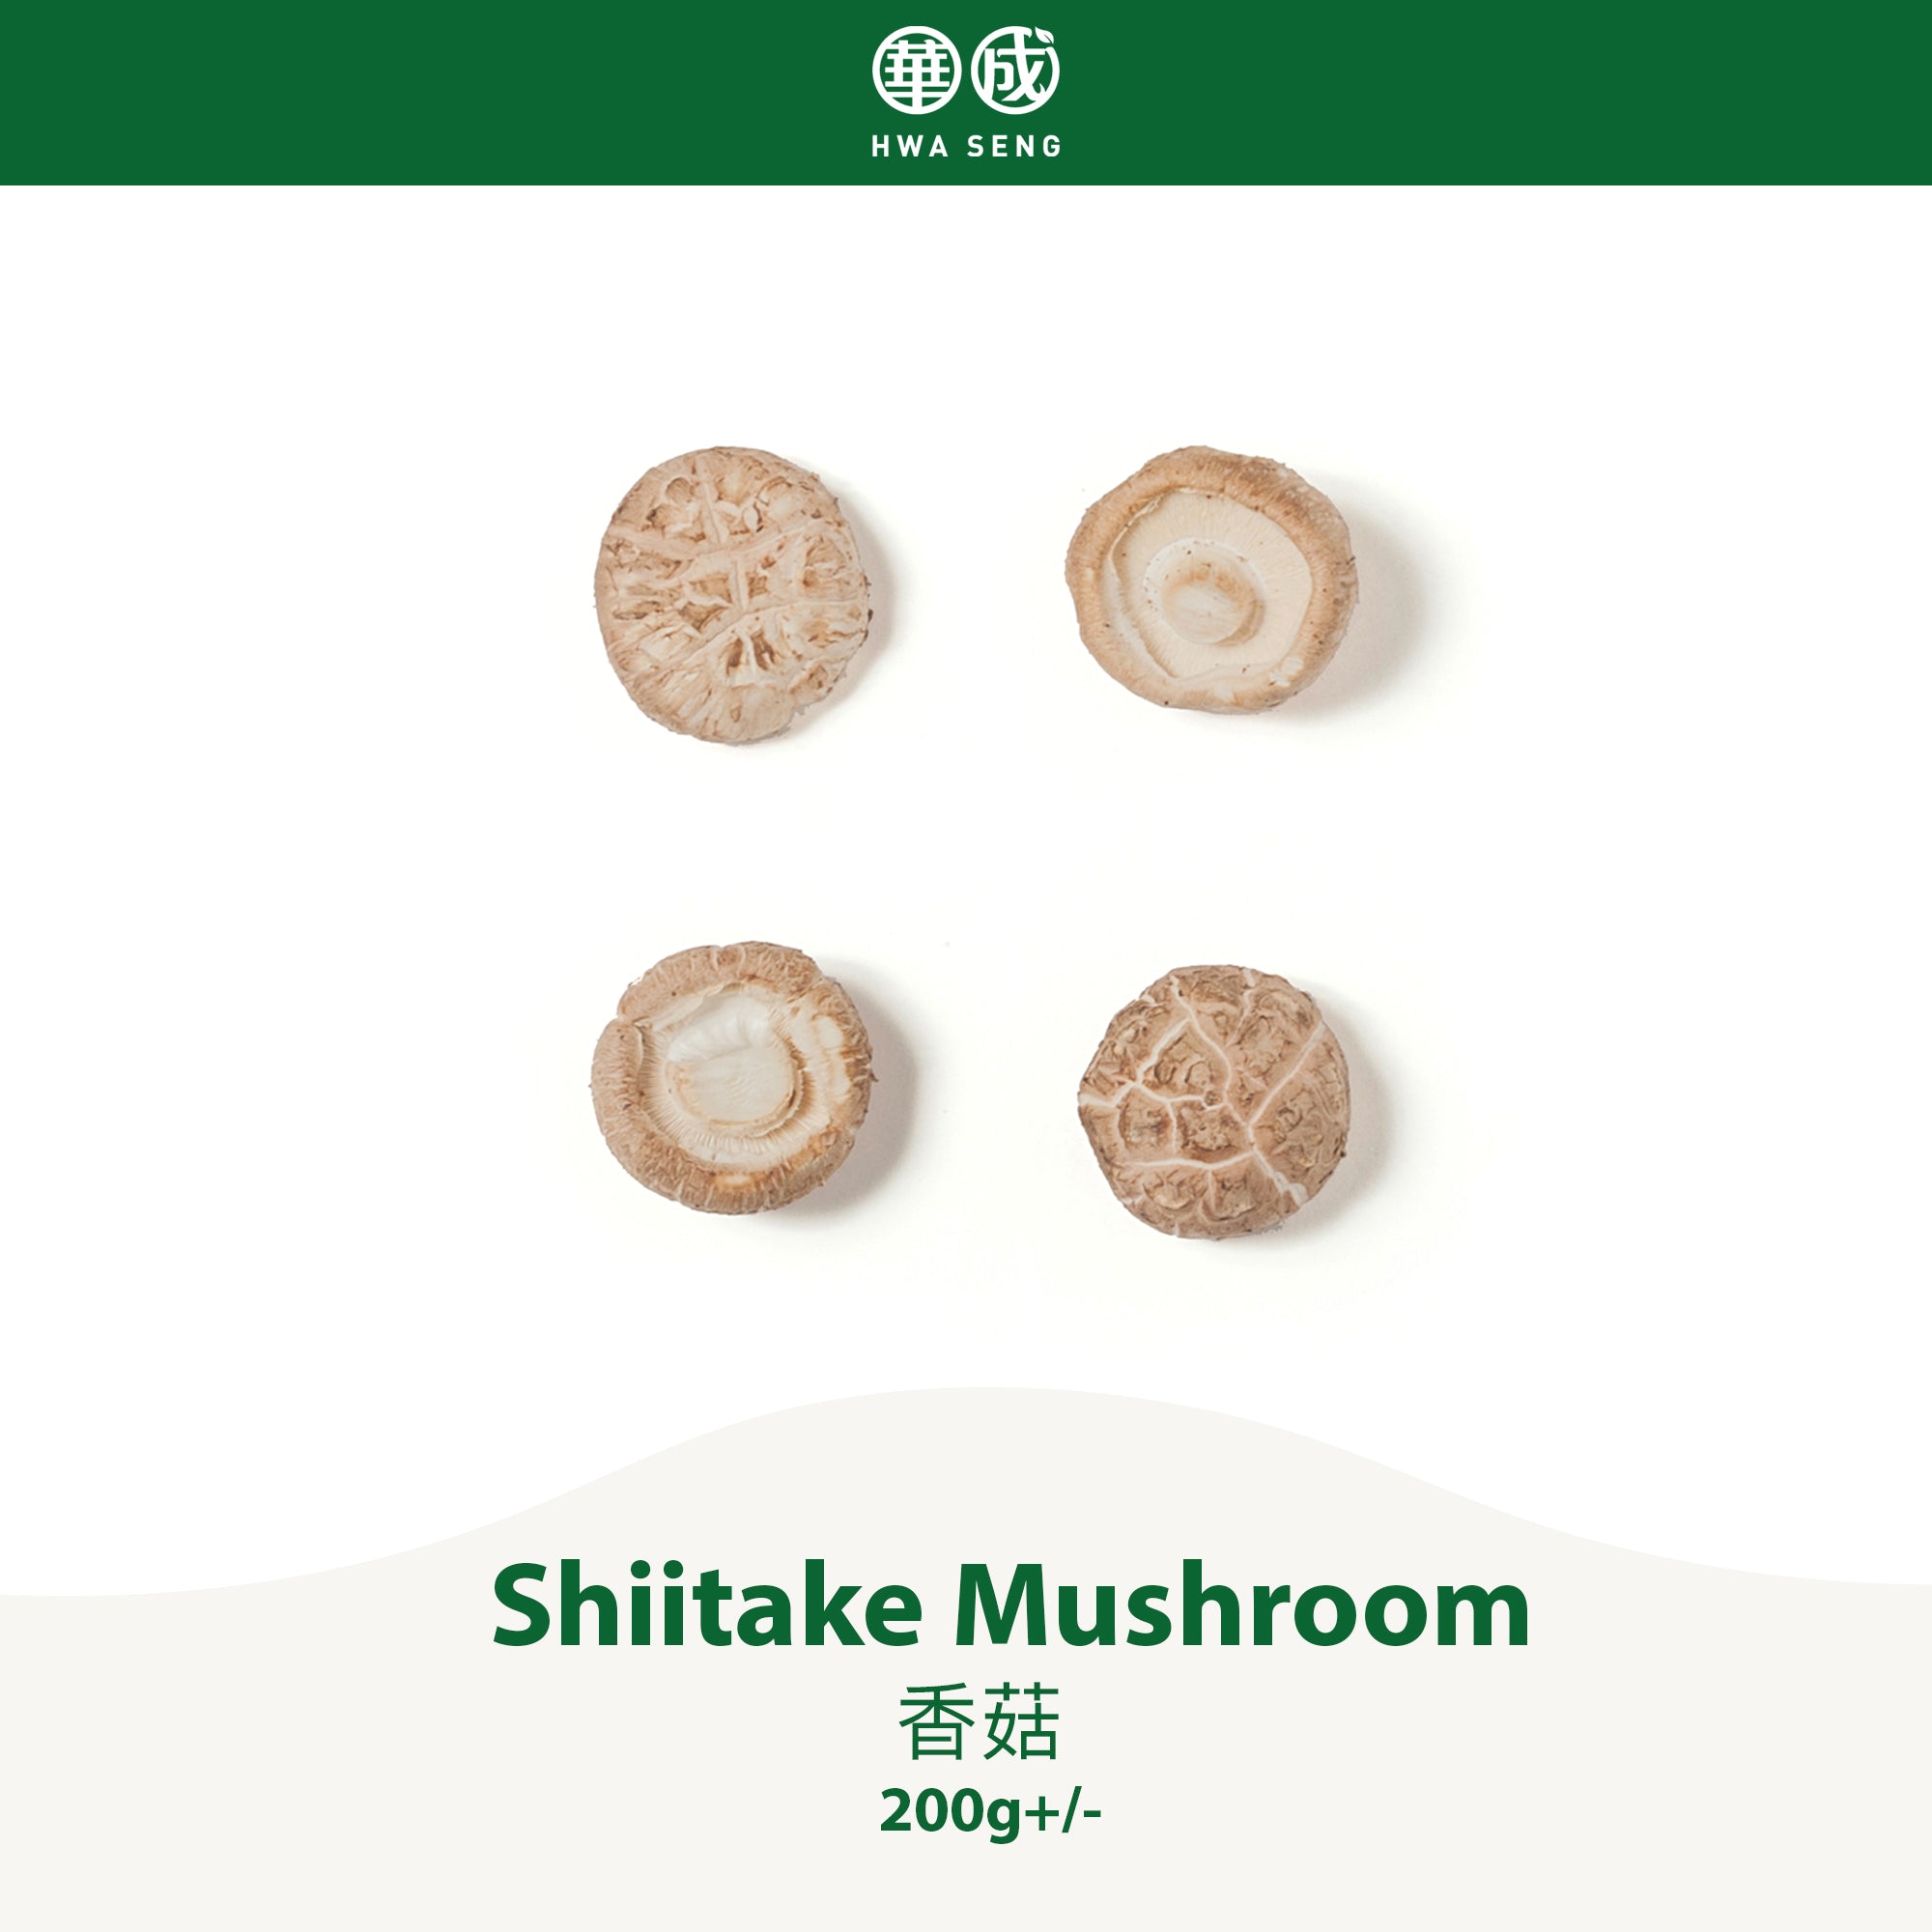 Shiitake Mushroom 香菇 200g+/-